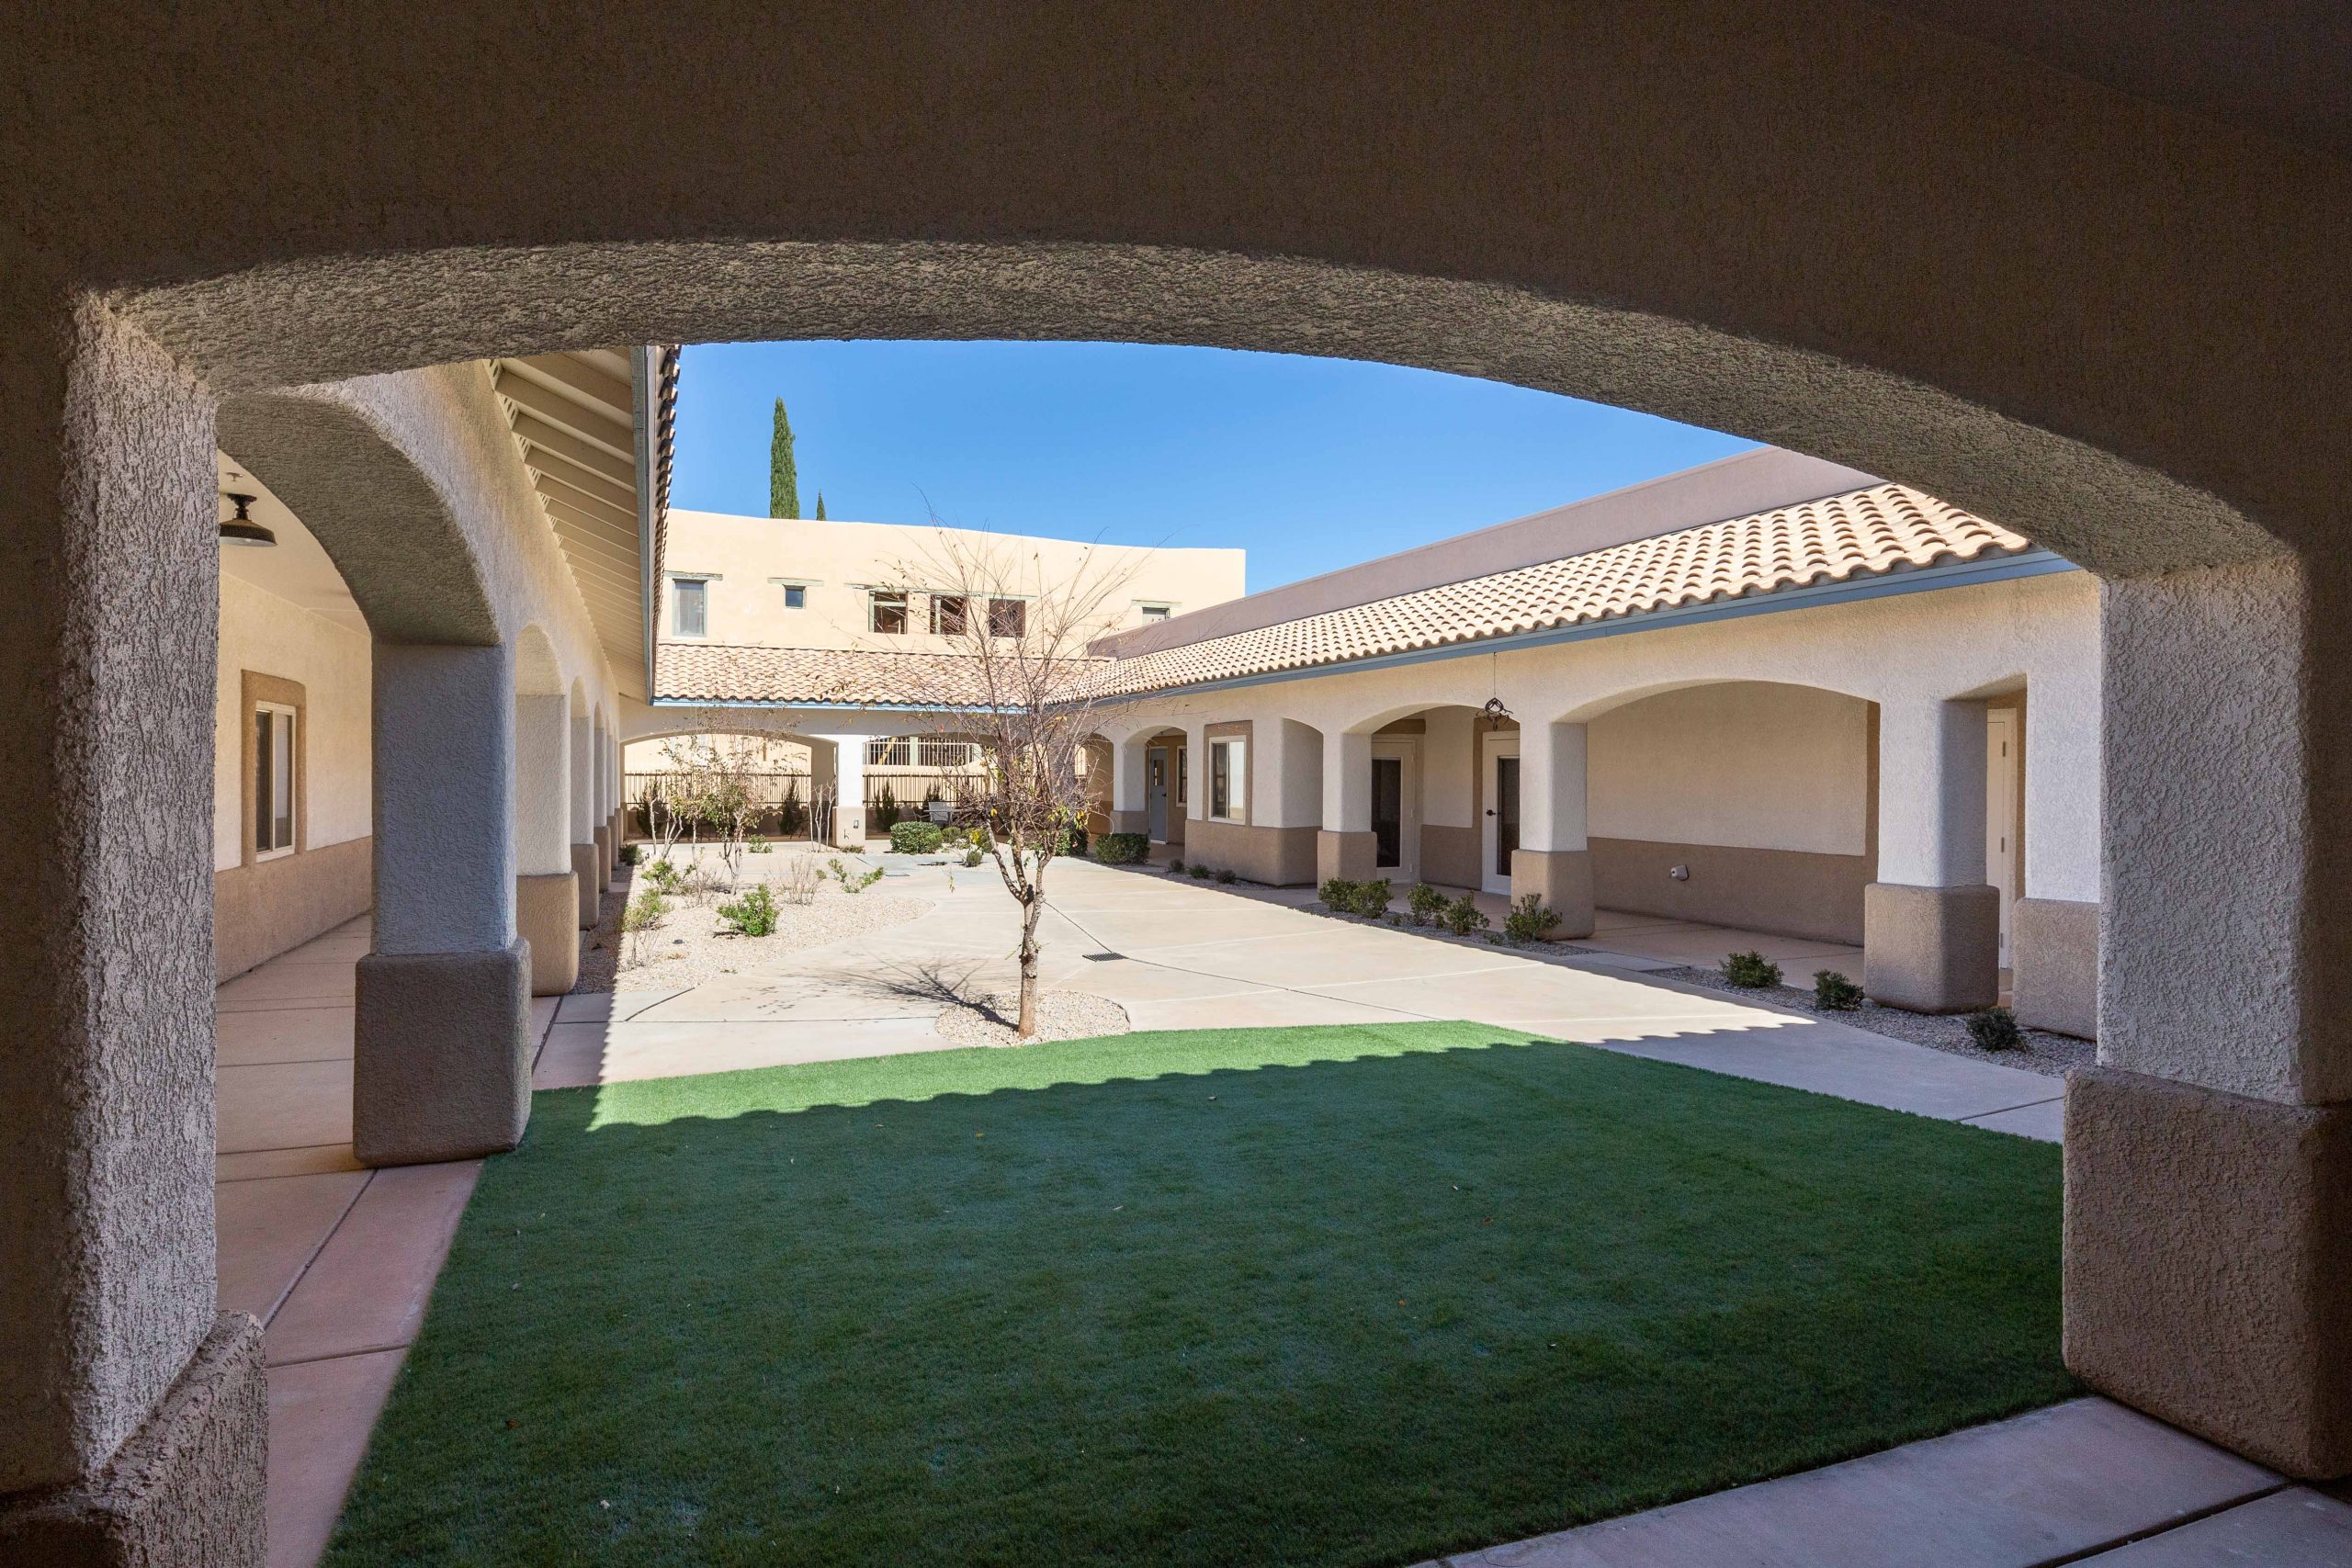 Courtyard 1